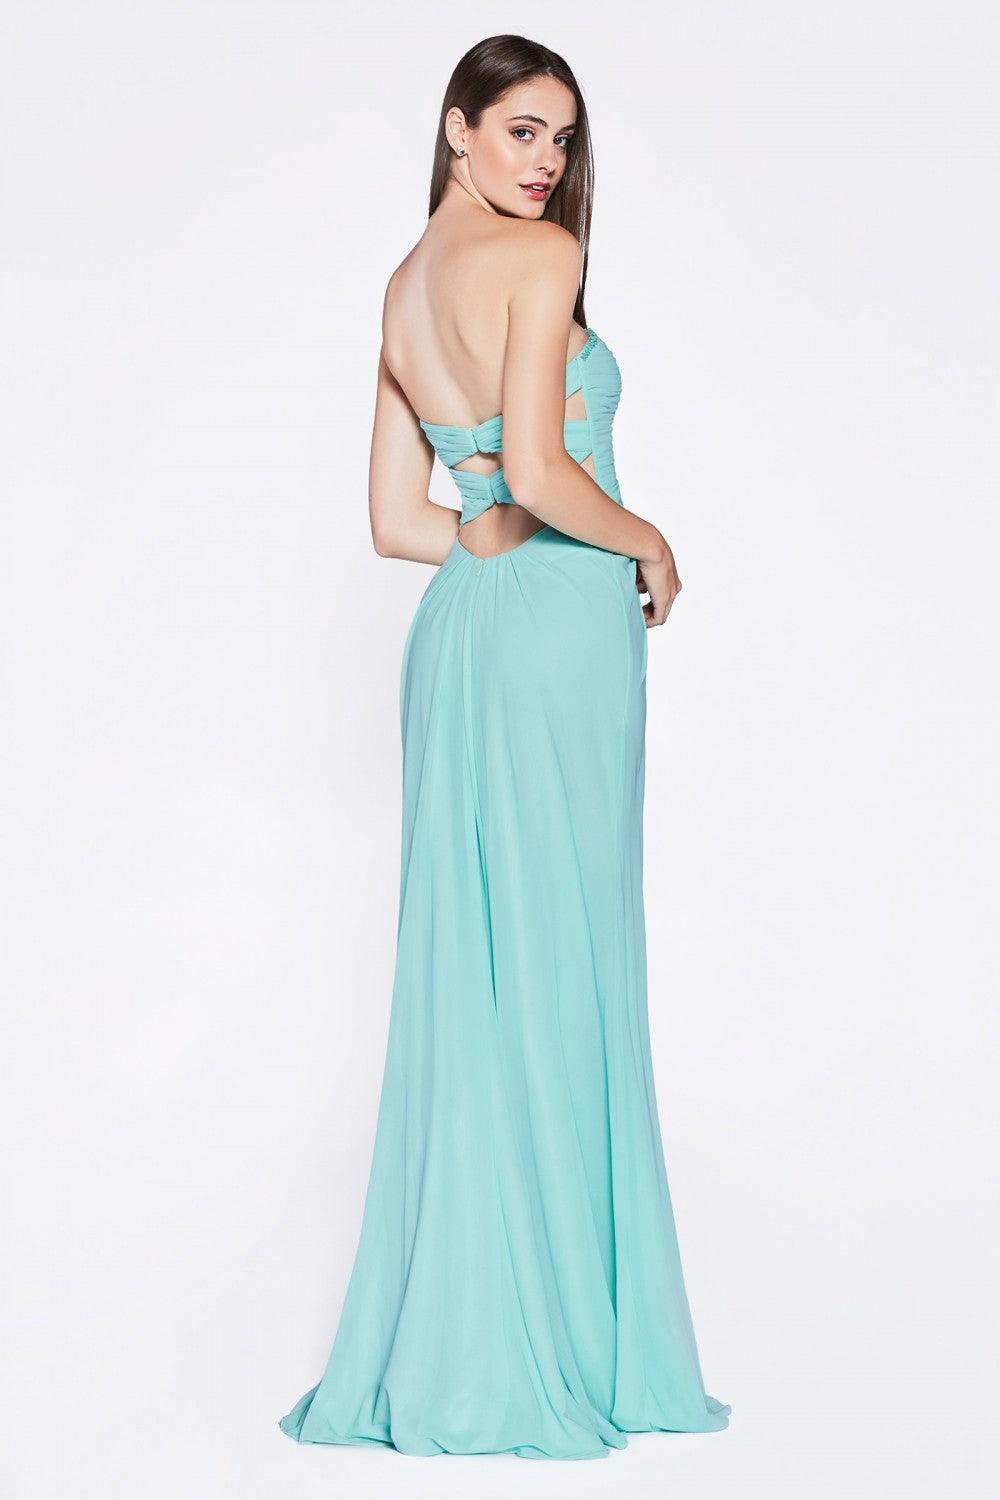 Strapless Long Formal Dress Evening Gown - The Dress Outlet Cinderella Divine